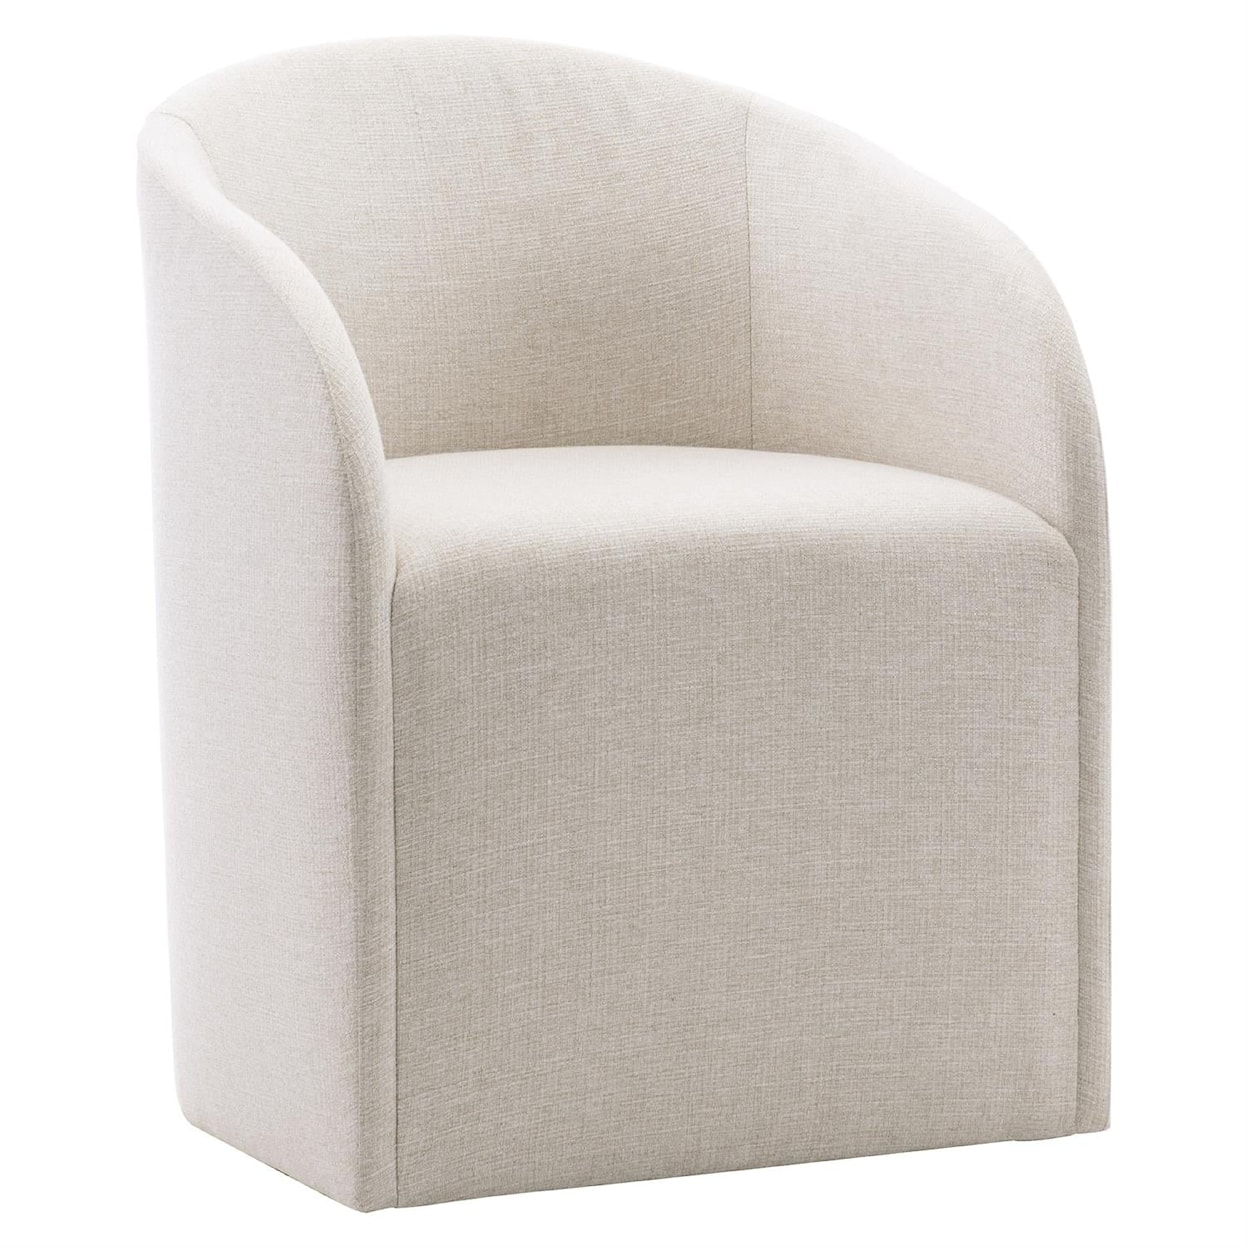 Bernhardt Logan Square Finch Arm Chair